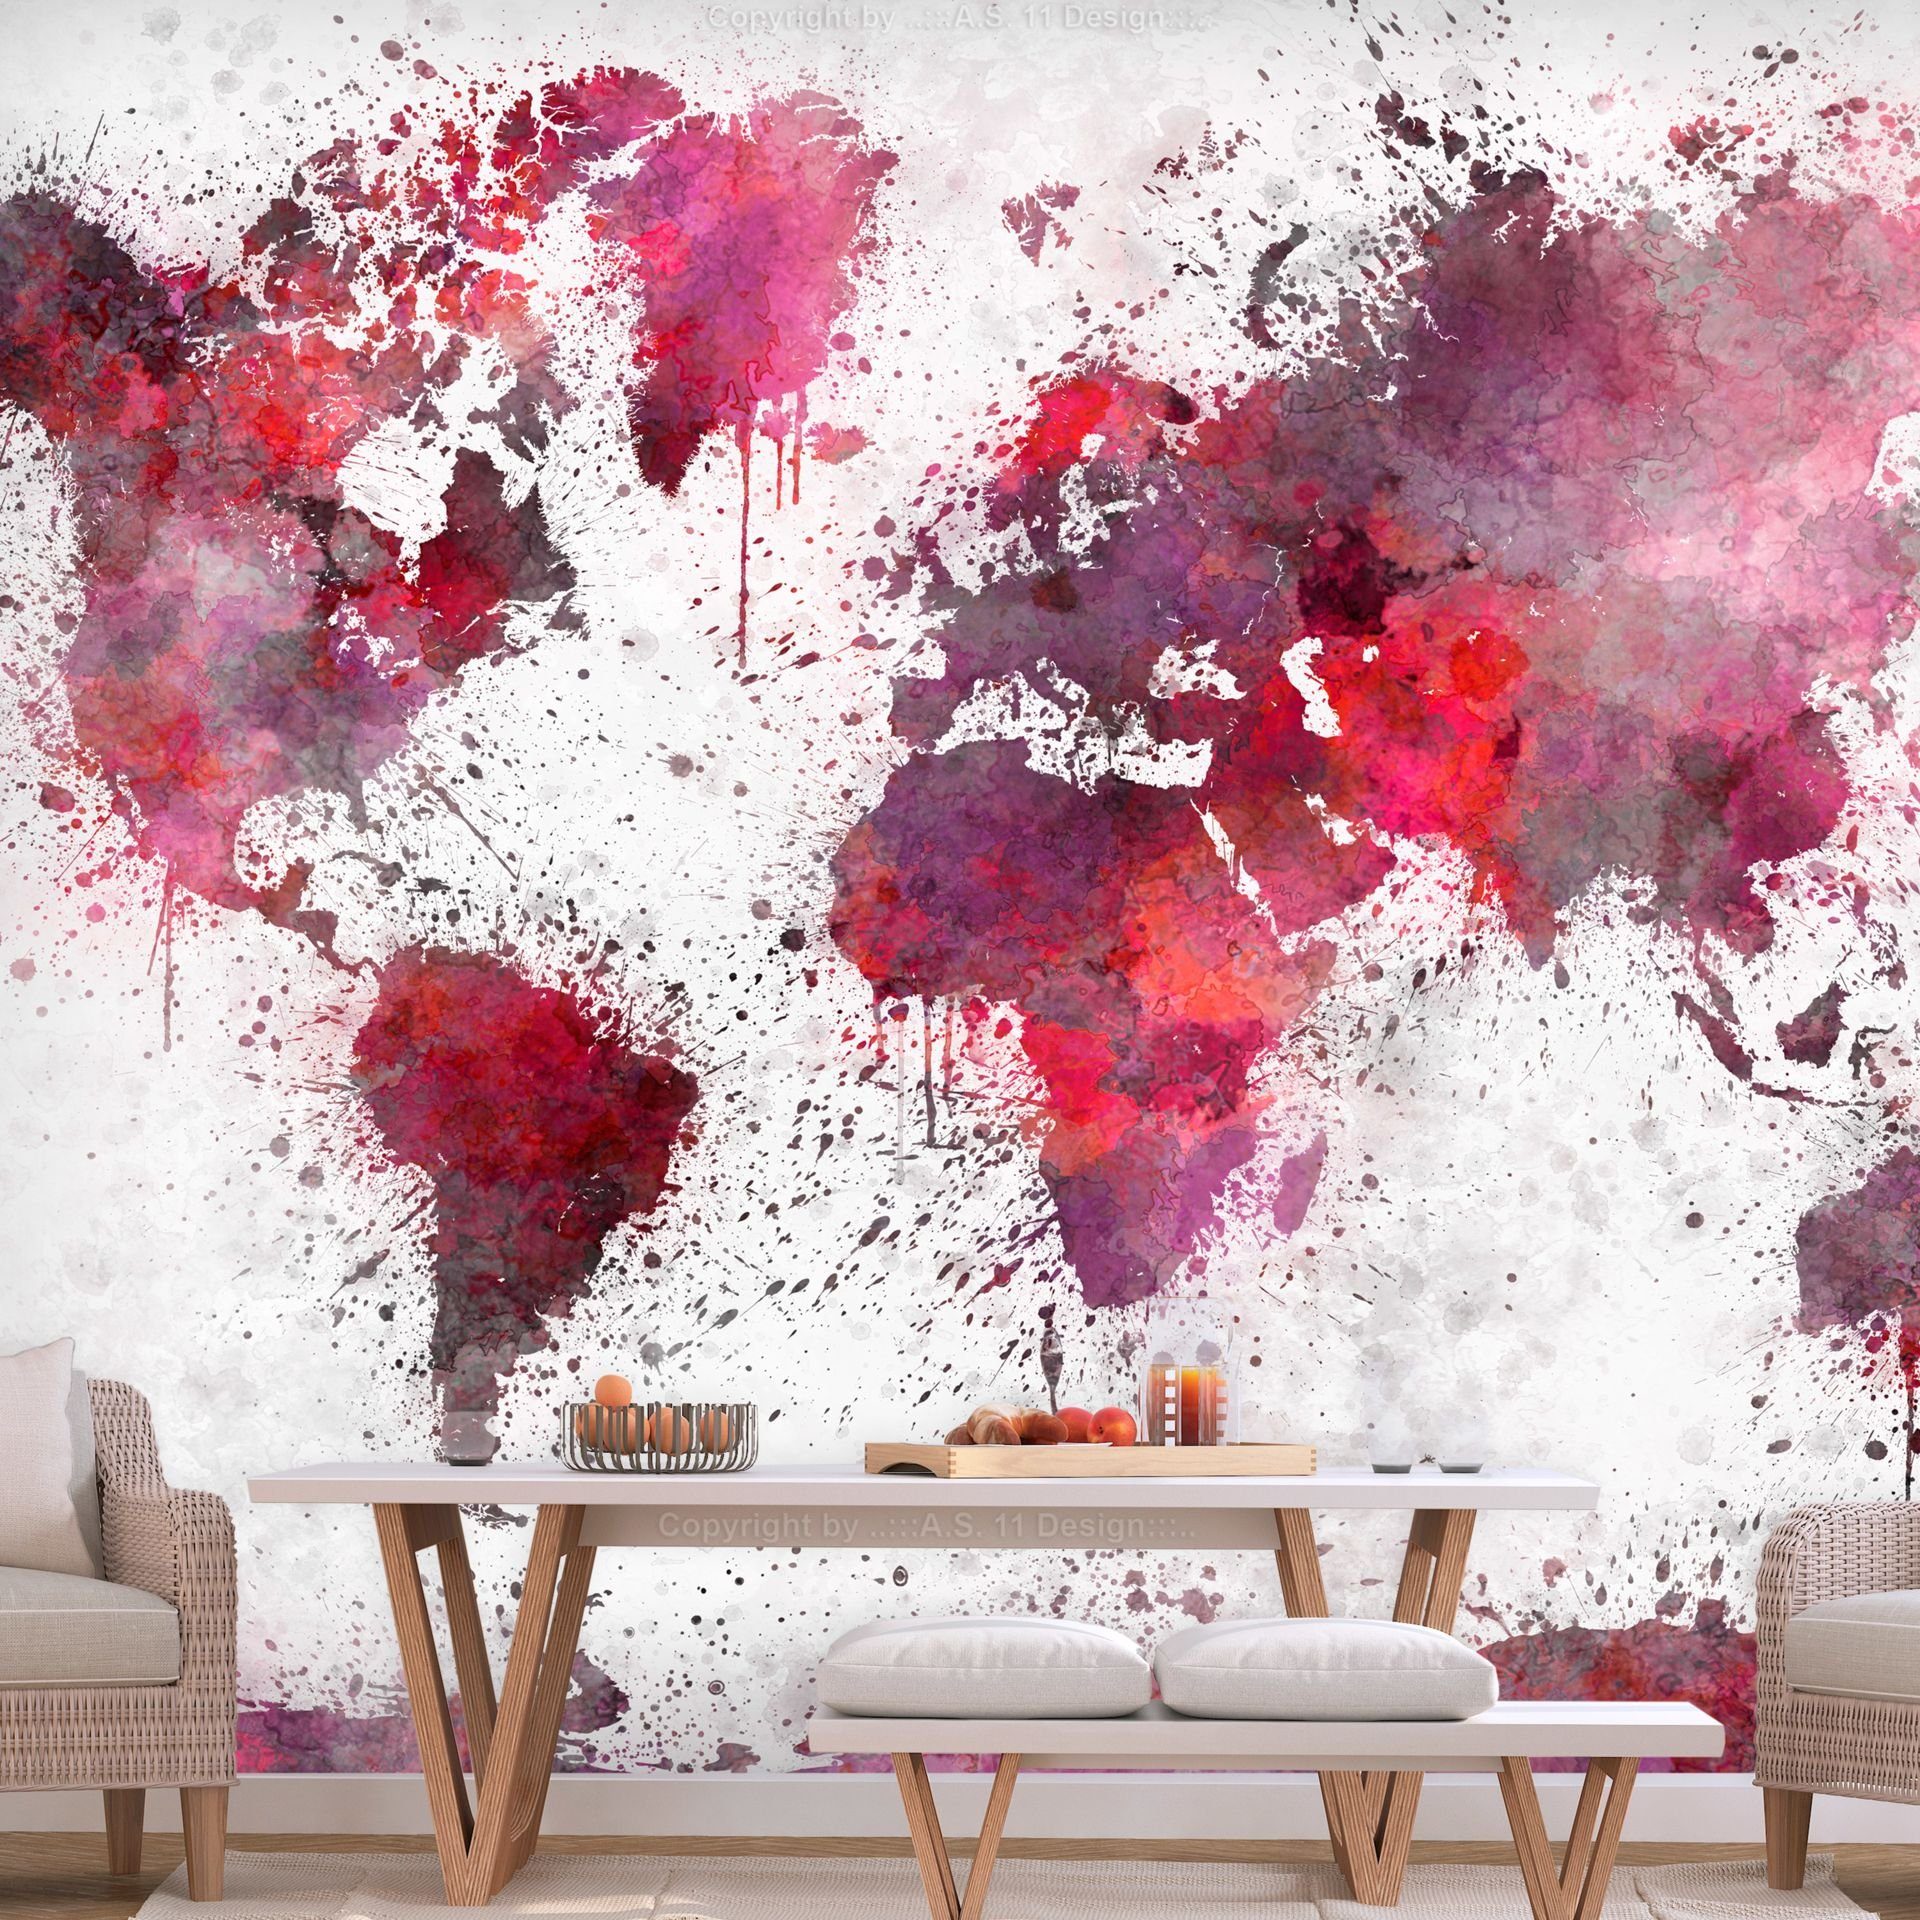 KUNSTLOFT Vliestapete World Map: Red Tapete 0.98x0.7 halb-matt, m, matt, Design Watercolors lichtbeständige